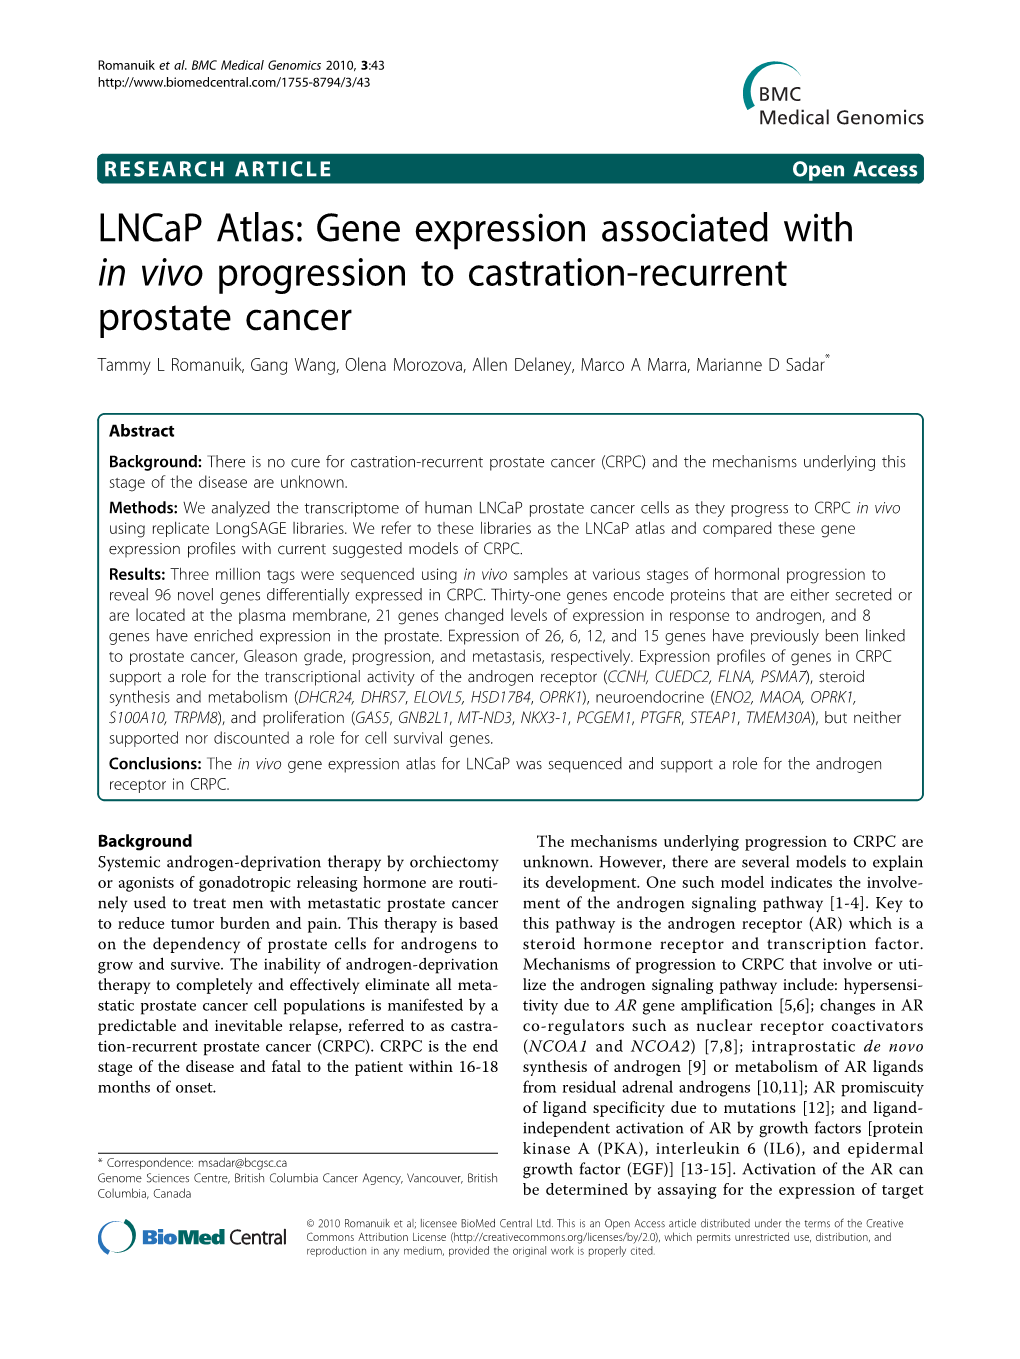 Lncap Atlas: Gene Expression Associated with in Vivo Progression